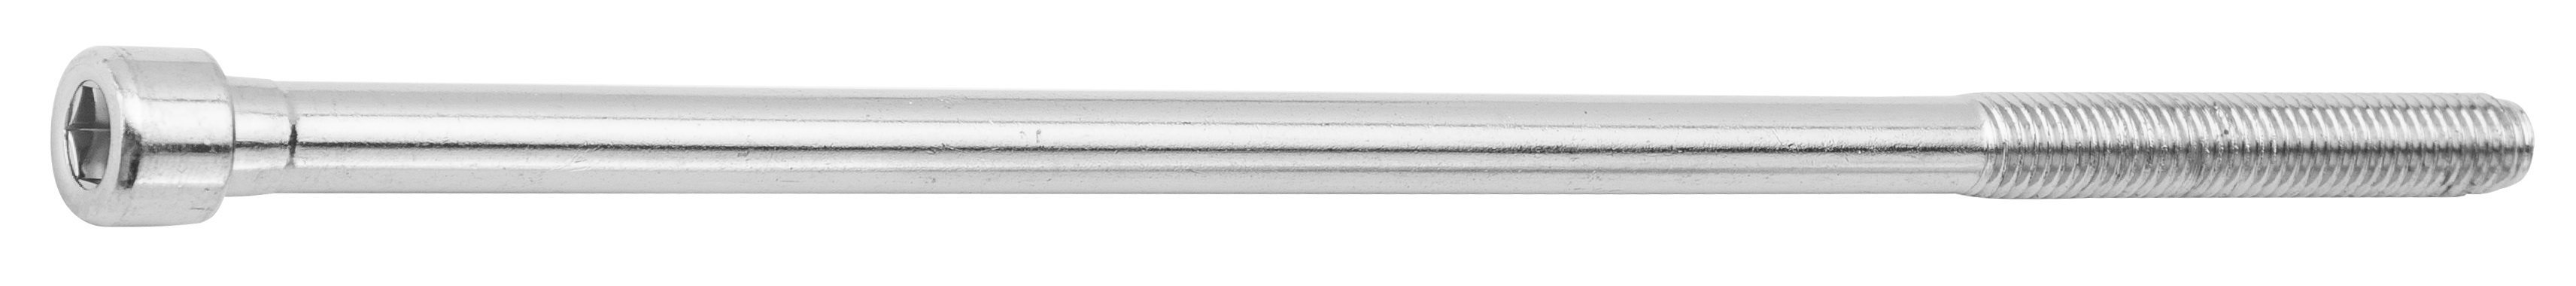 Болт выноса руля сталь (без гайки), 190 мм